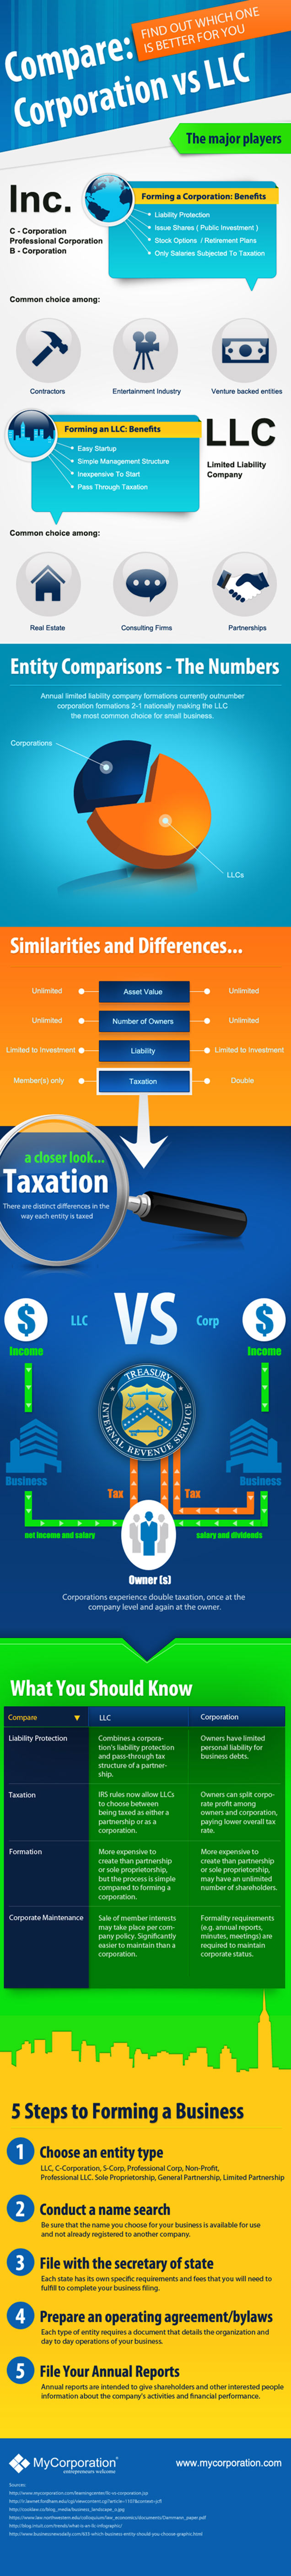 Compare Corporation vs LLC - Business infographic